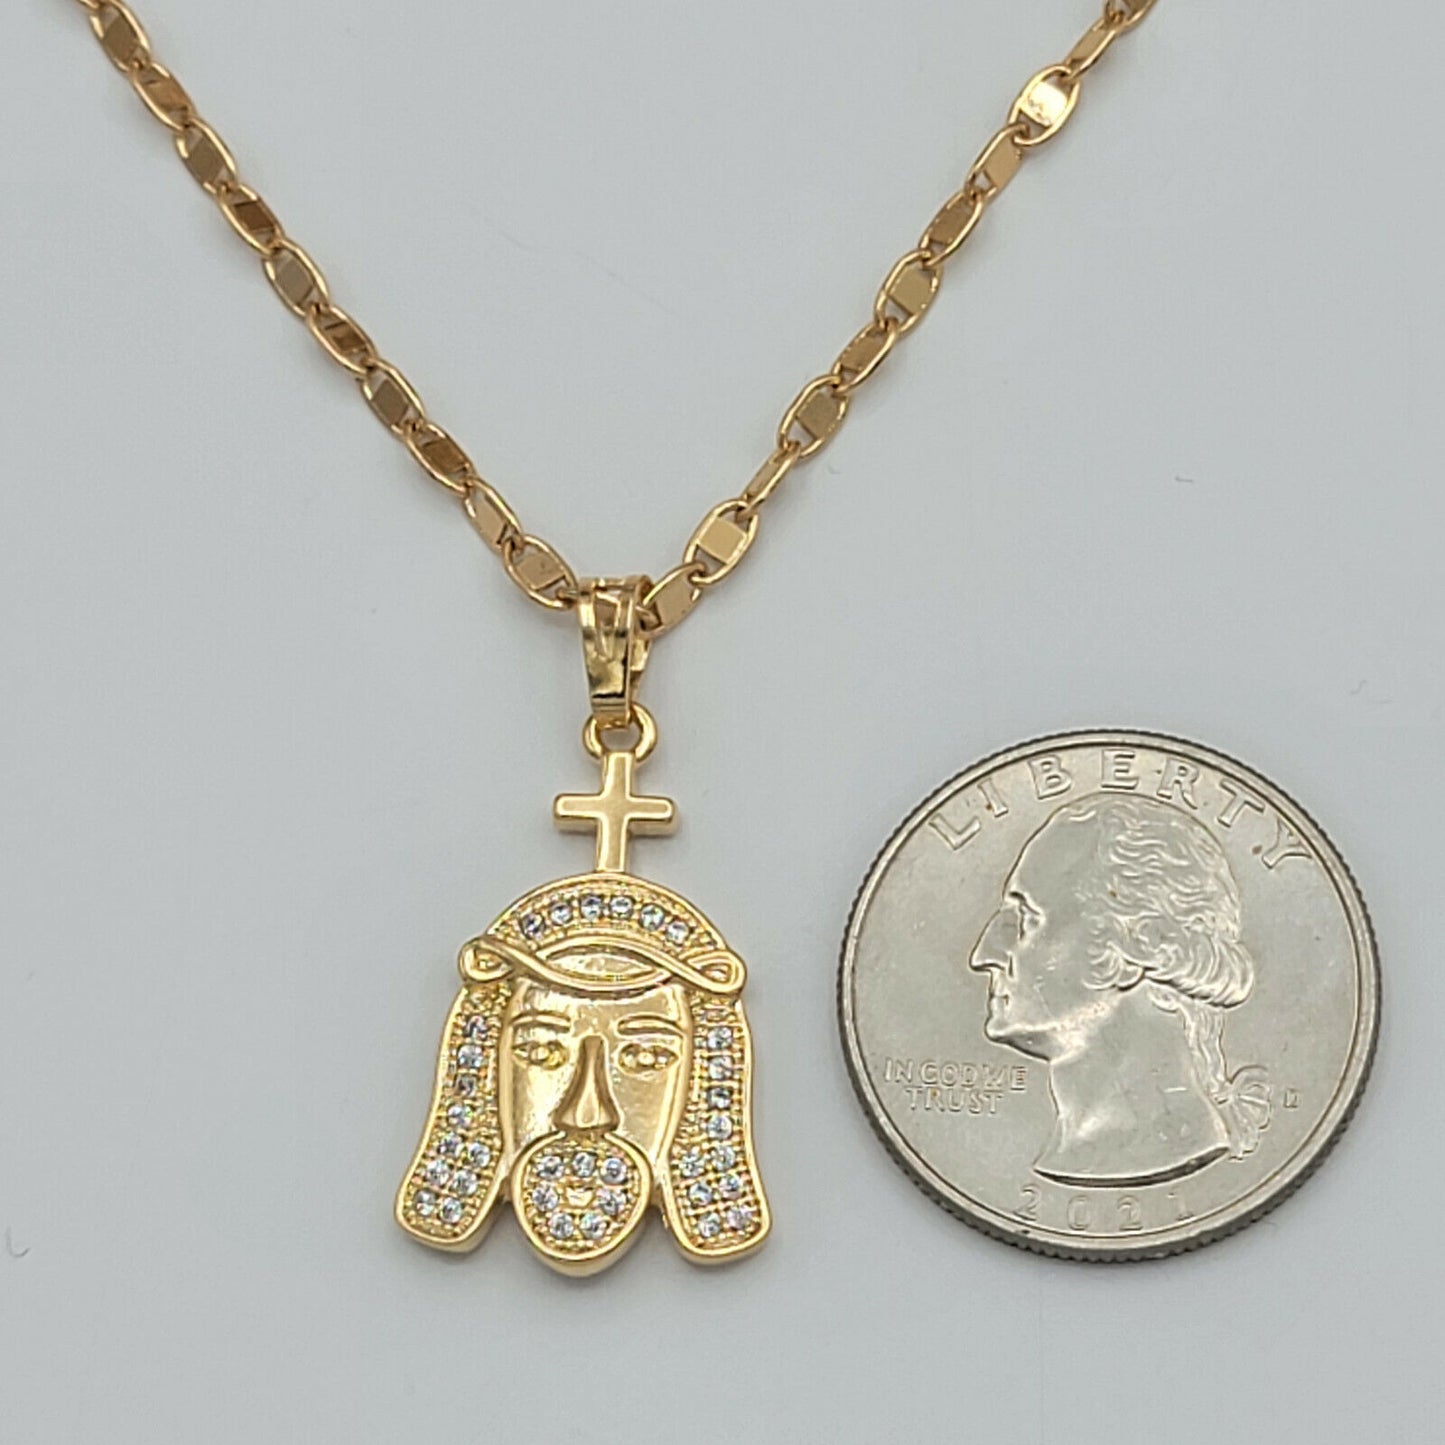 Necklaces - 18K Gold Plated. Cz Jesus Face Pendant & Chain.